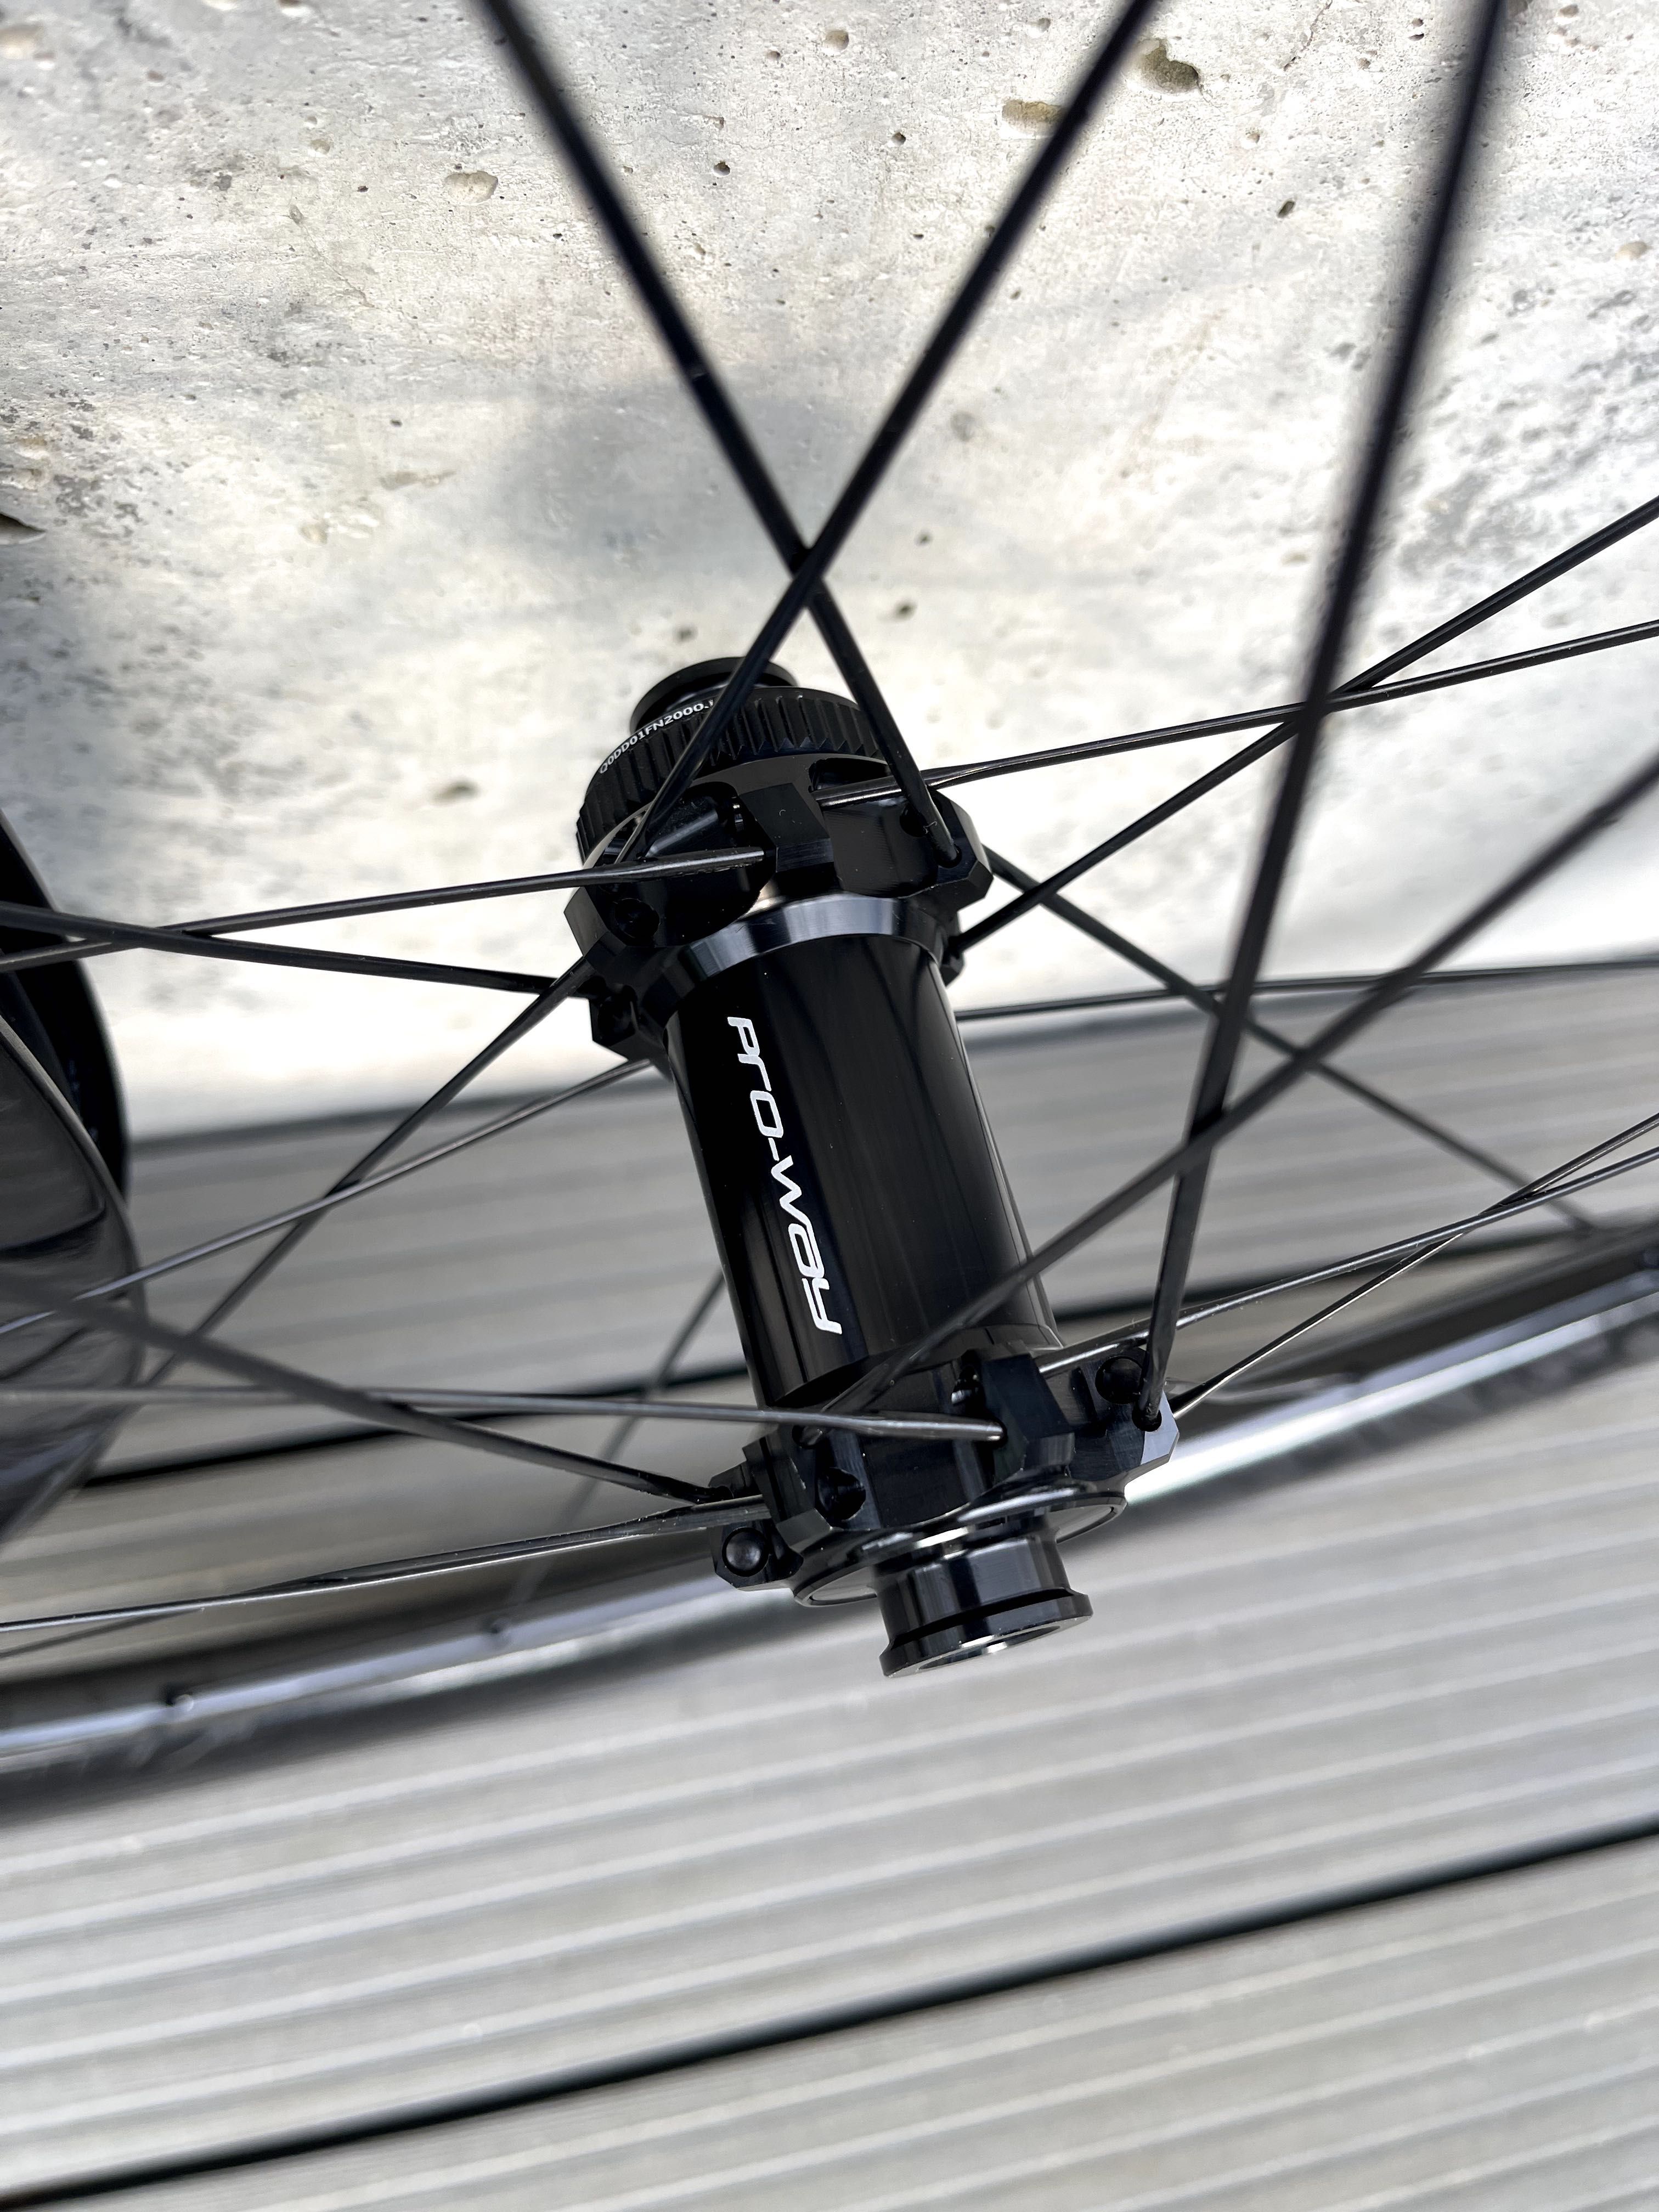 Koła szosowe carbon PRO-WAY TITANIUM 50mm MARBLE 1395g! (disc rower)